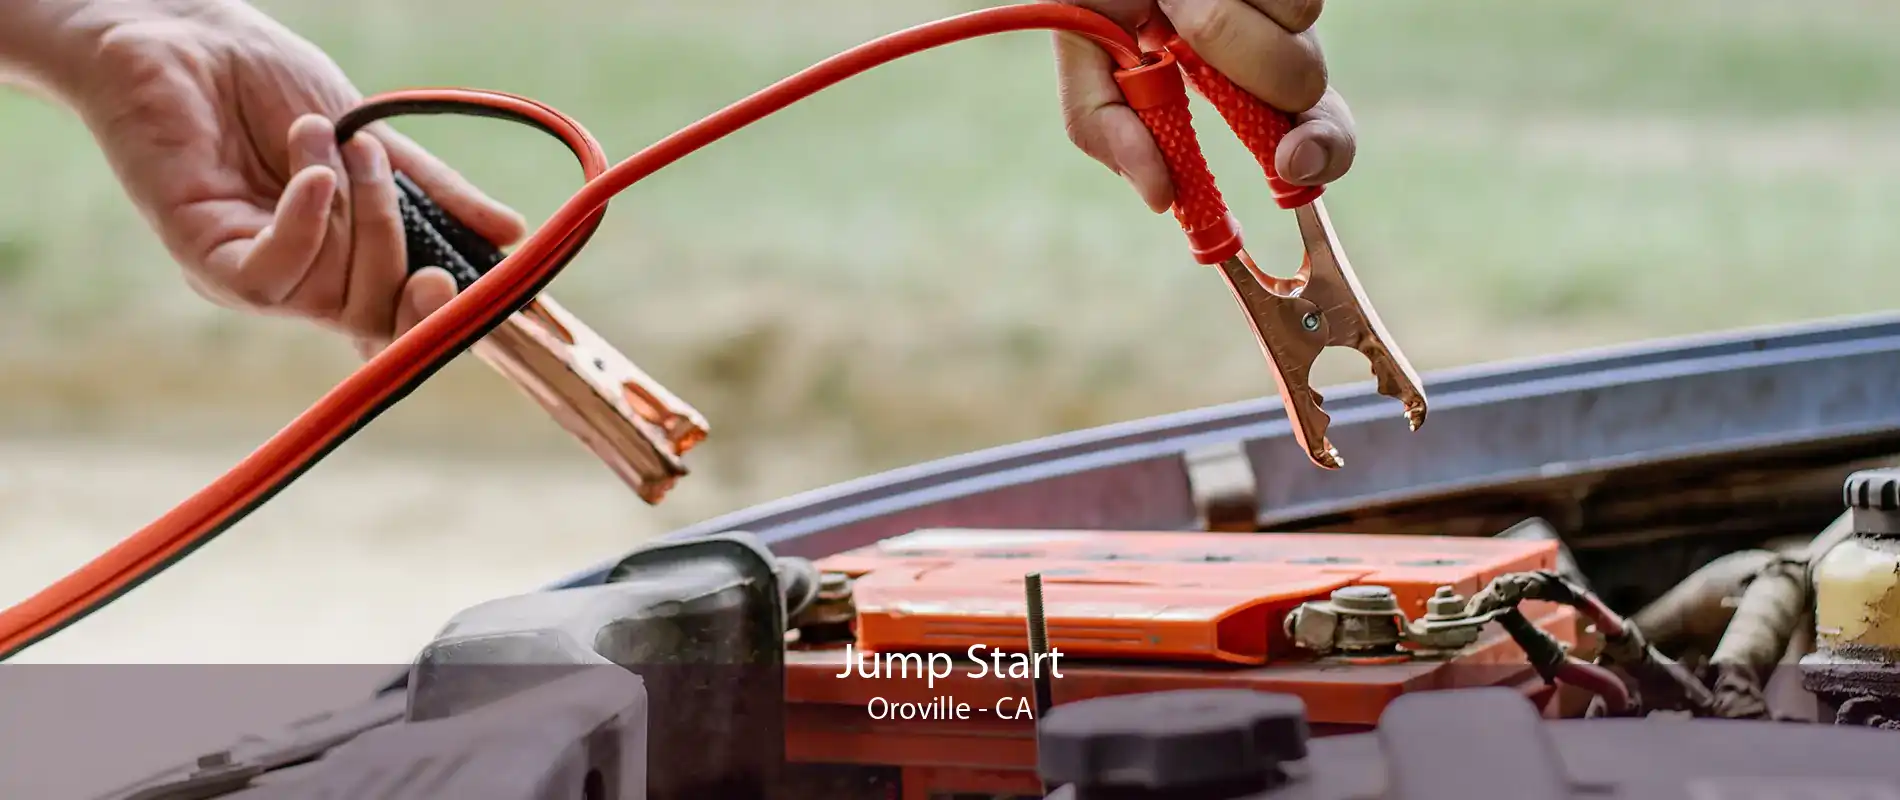 Jump Start Oroville - CA